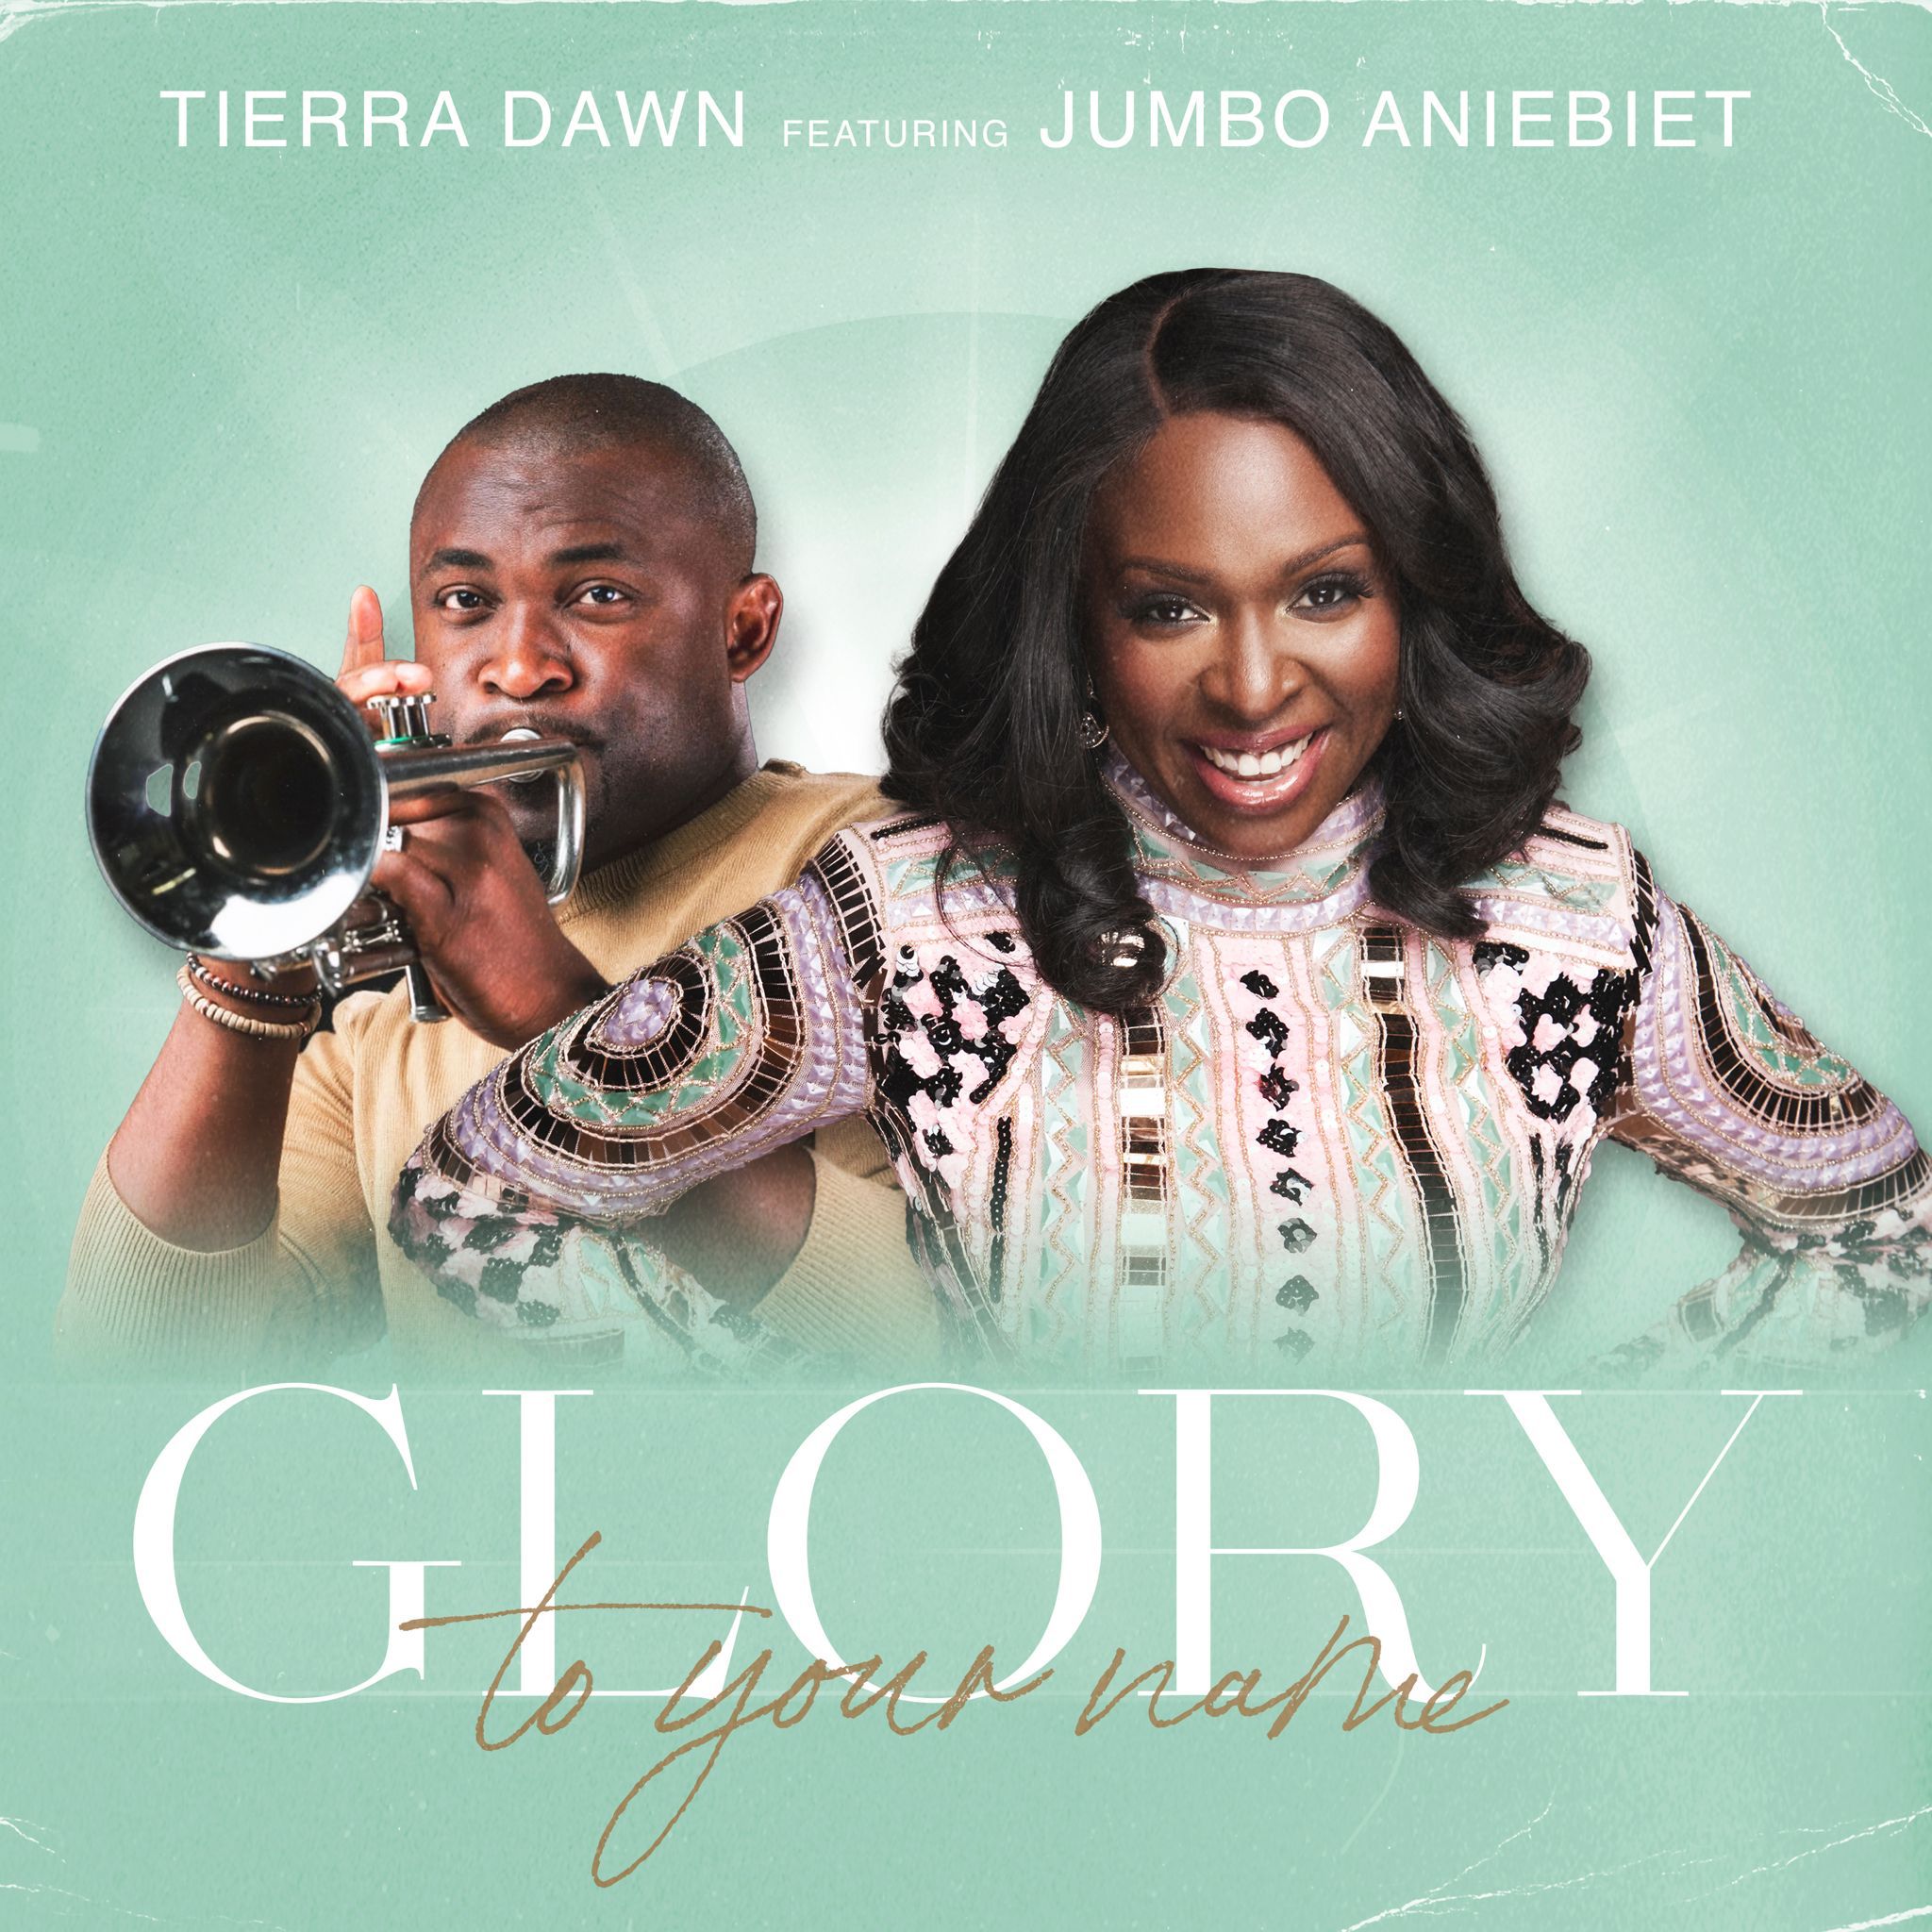 [Video] Glory To Your Name - TierraDawn ft. Jumbo